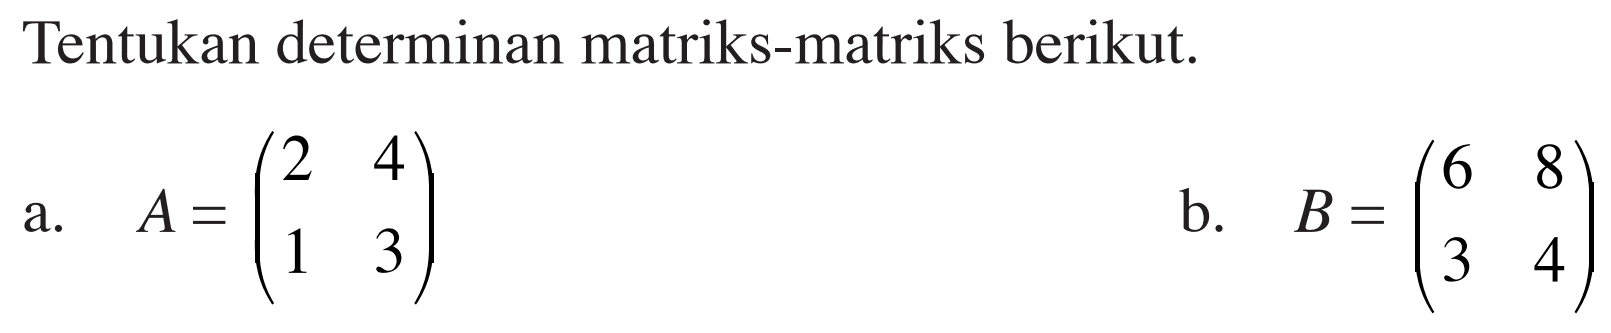 Tentukan determinan matriks-matriks berikut. a. A = (2 4 1 3) b. B = (6 8 3 4)